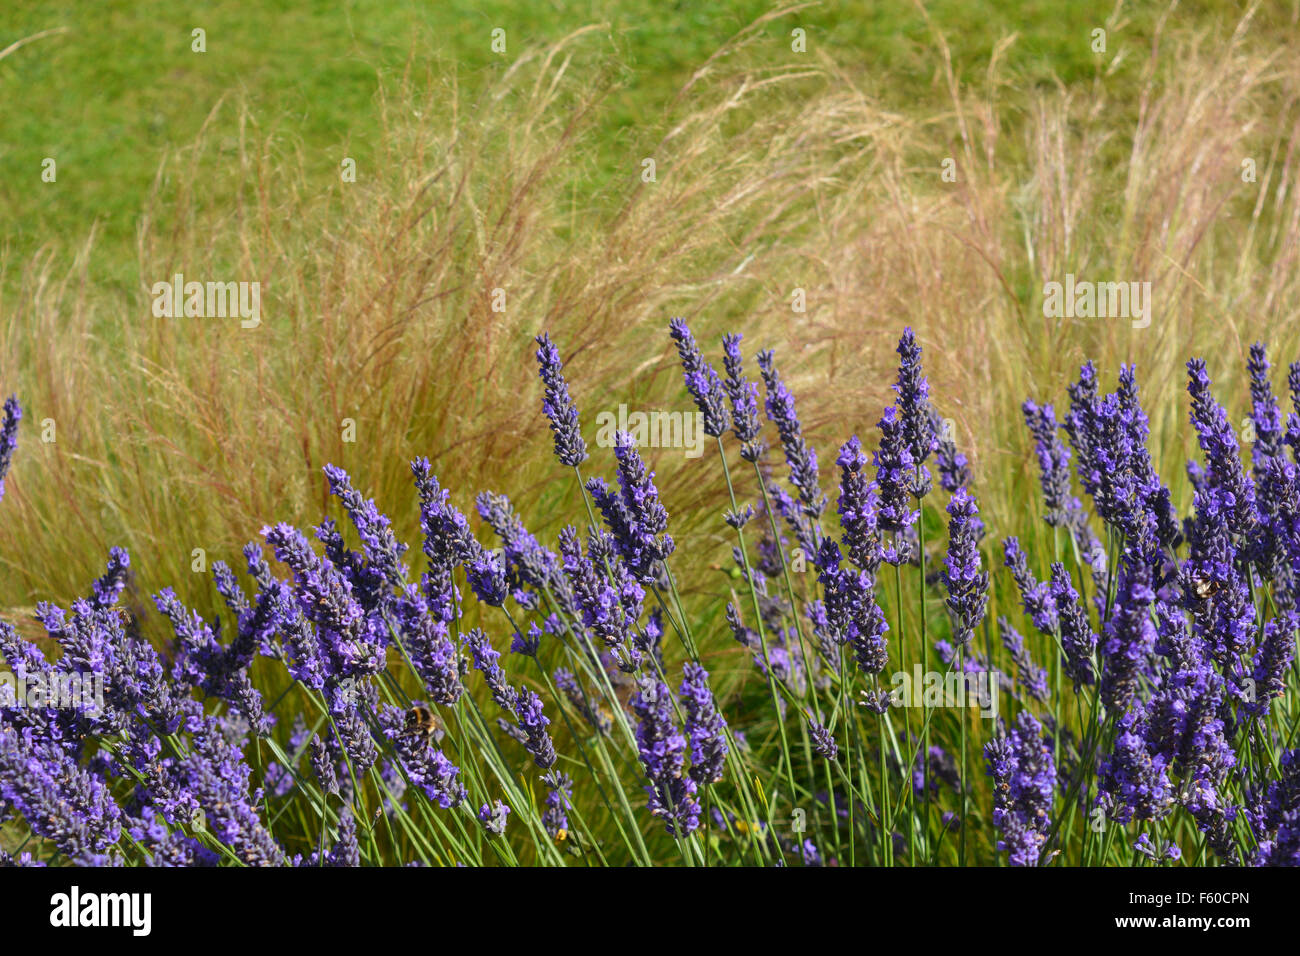 Lavender & Grass, Angustifolia Hidcote & Stipa Tenuissima (Pony Tails) at The Lavender Garden, Terrington, Yorkshire. Stock Photo